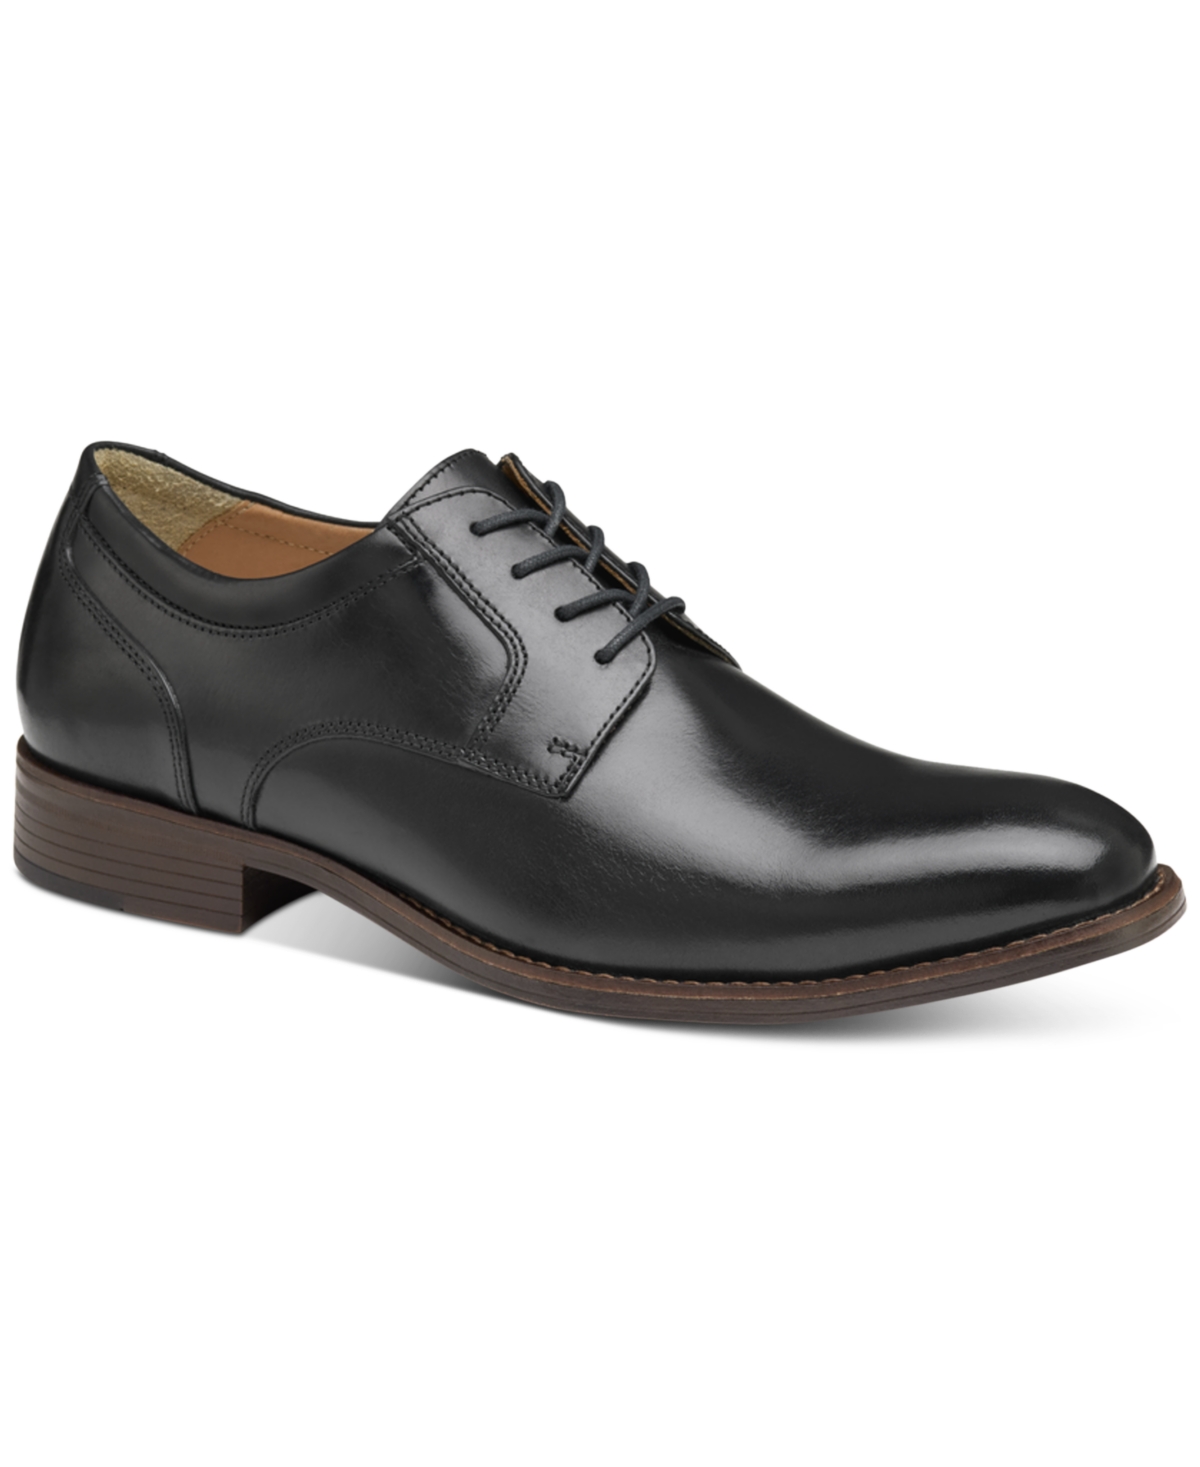 Men's Lewis Plain Toe Dress Shoe - Black